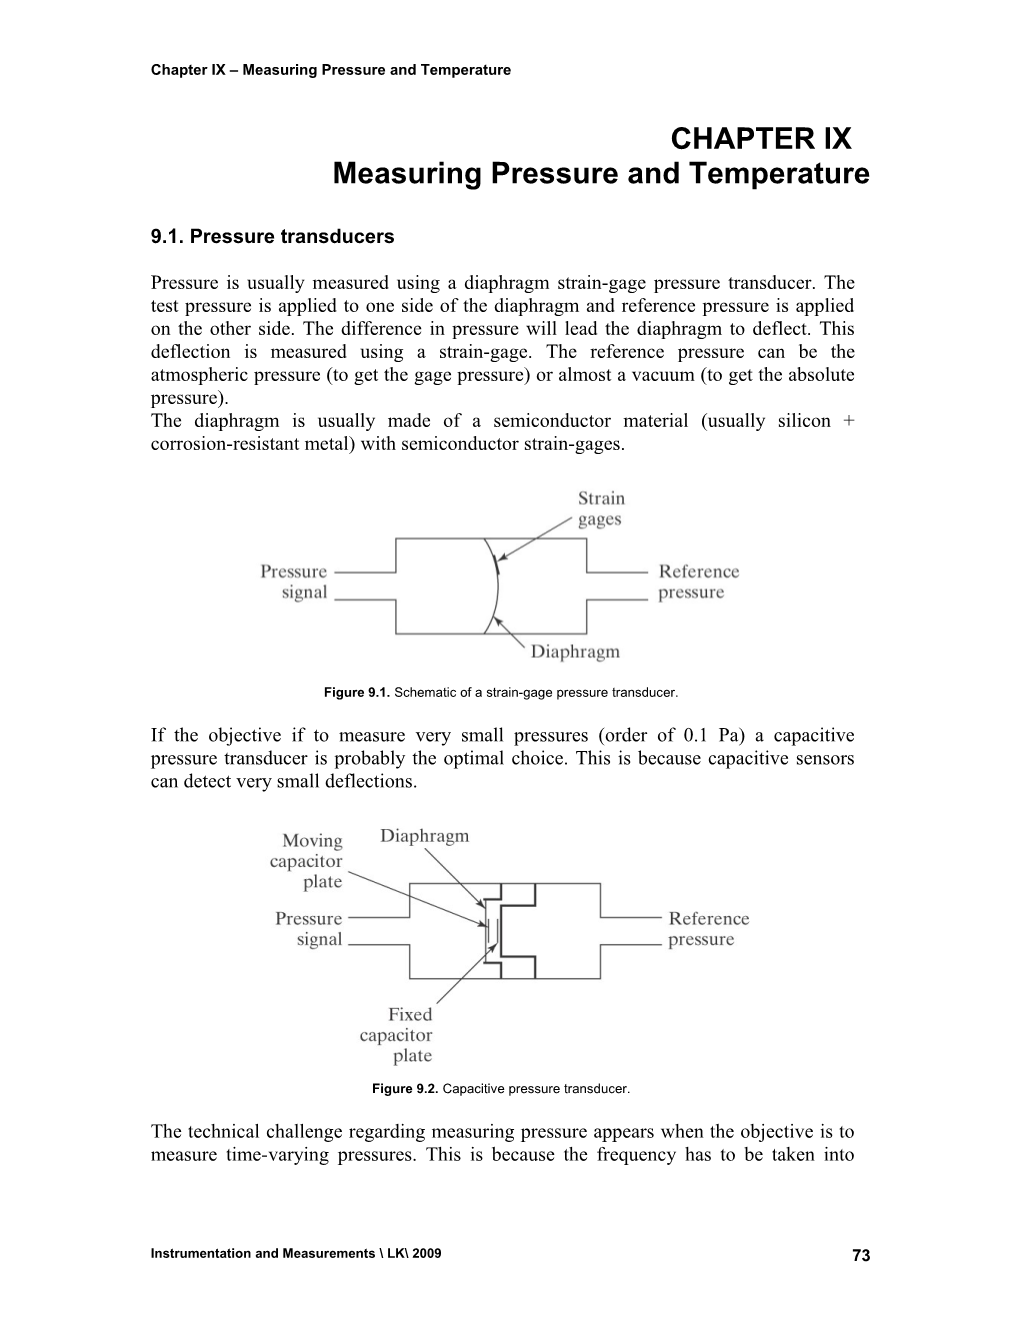 Chapter IX Measuring Pressure and Temperature